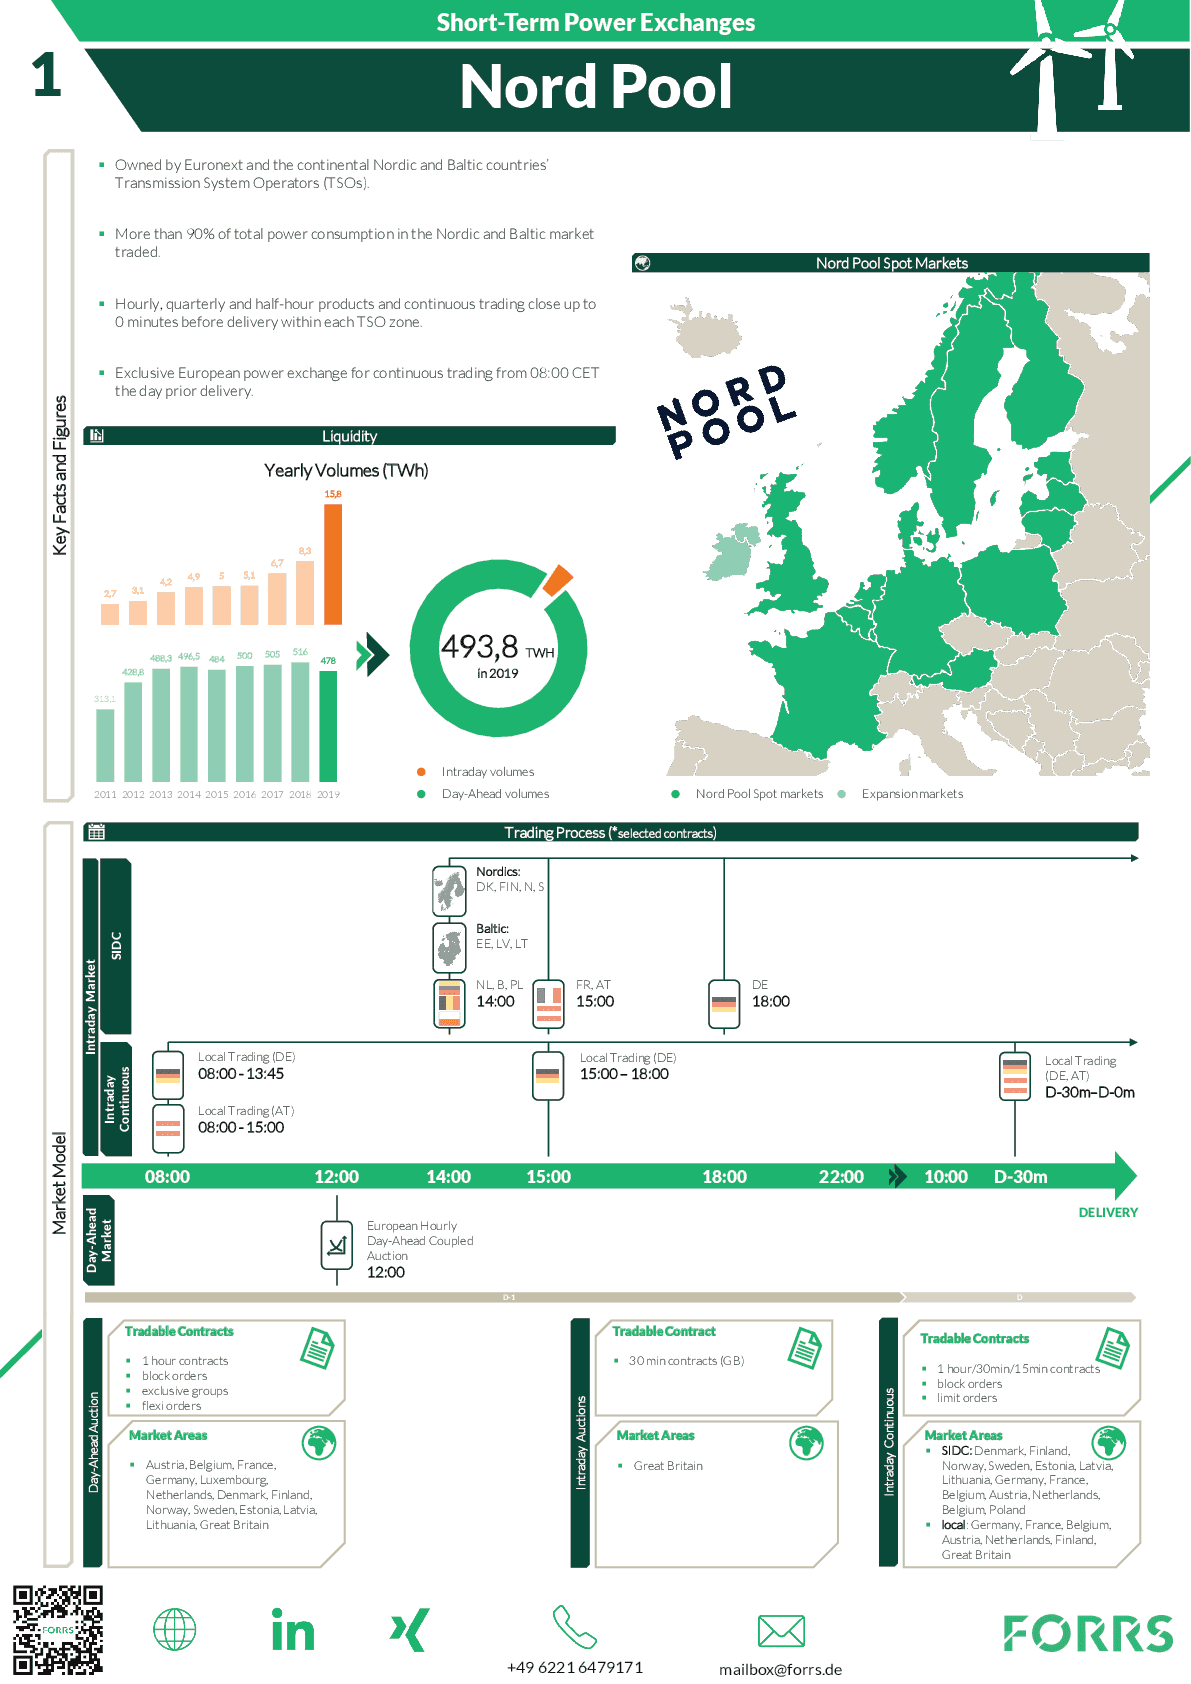 FORRS_European_Power_Spot_Exchanges-NORDPOOL_Factsheet.png